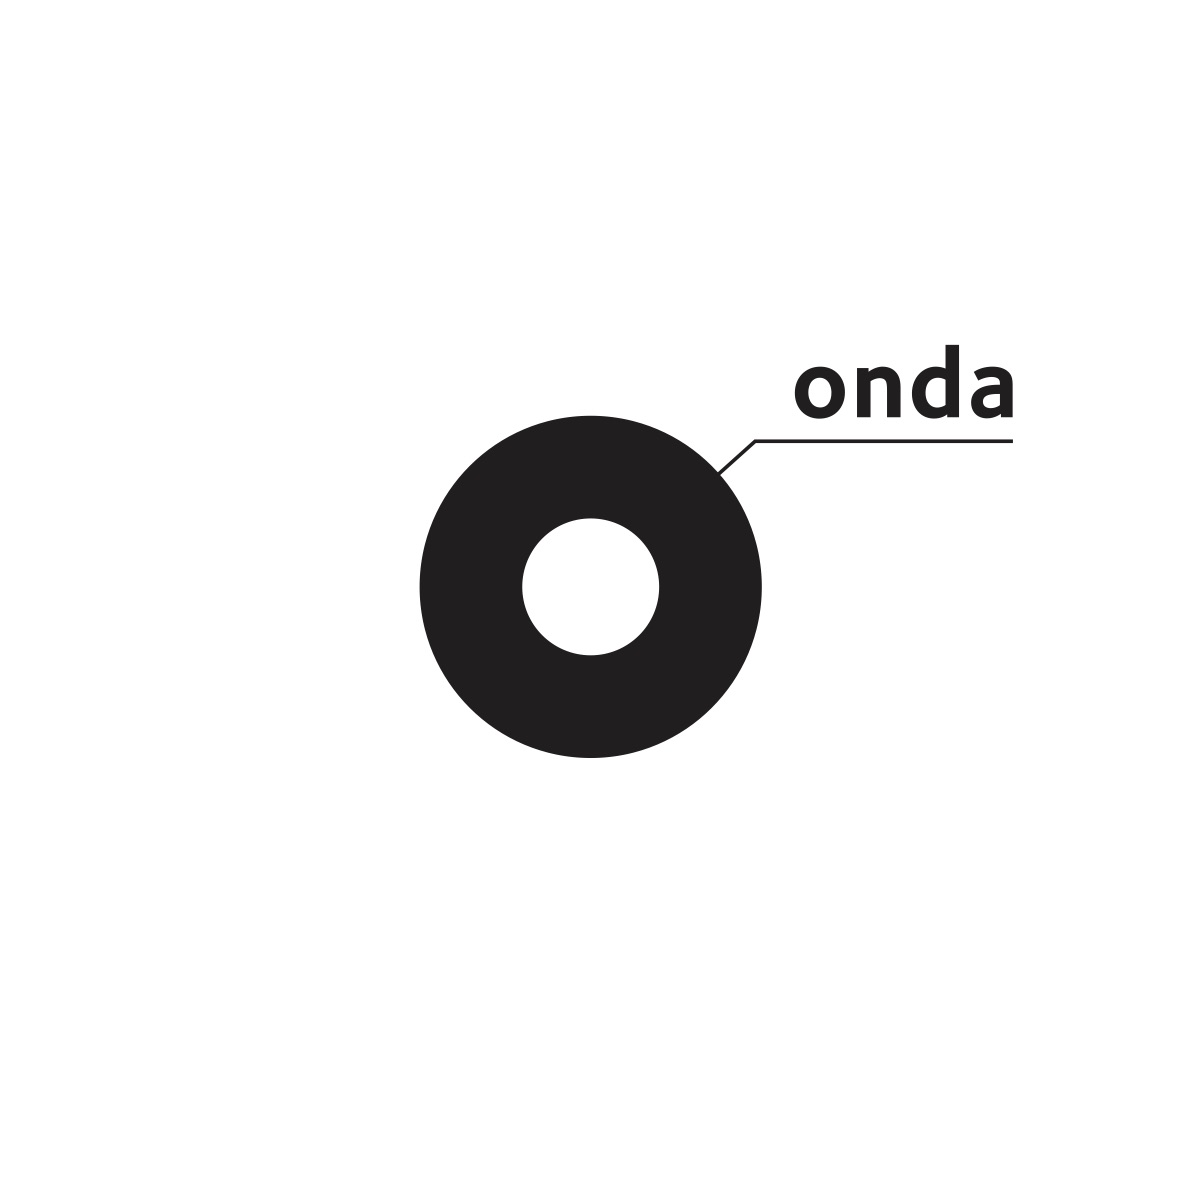 Onda_logo_noir_10-15mm